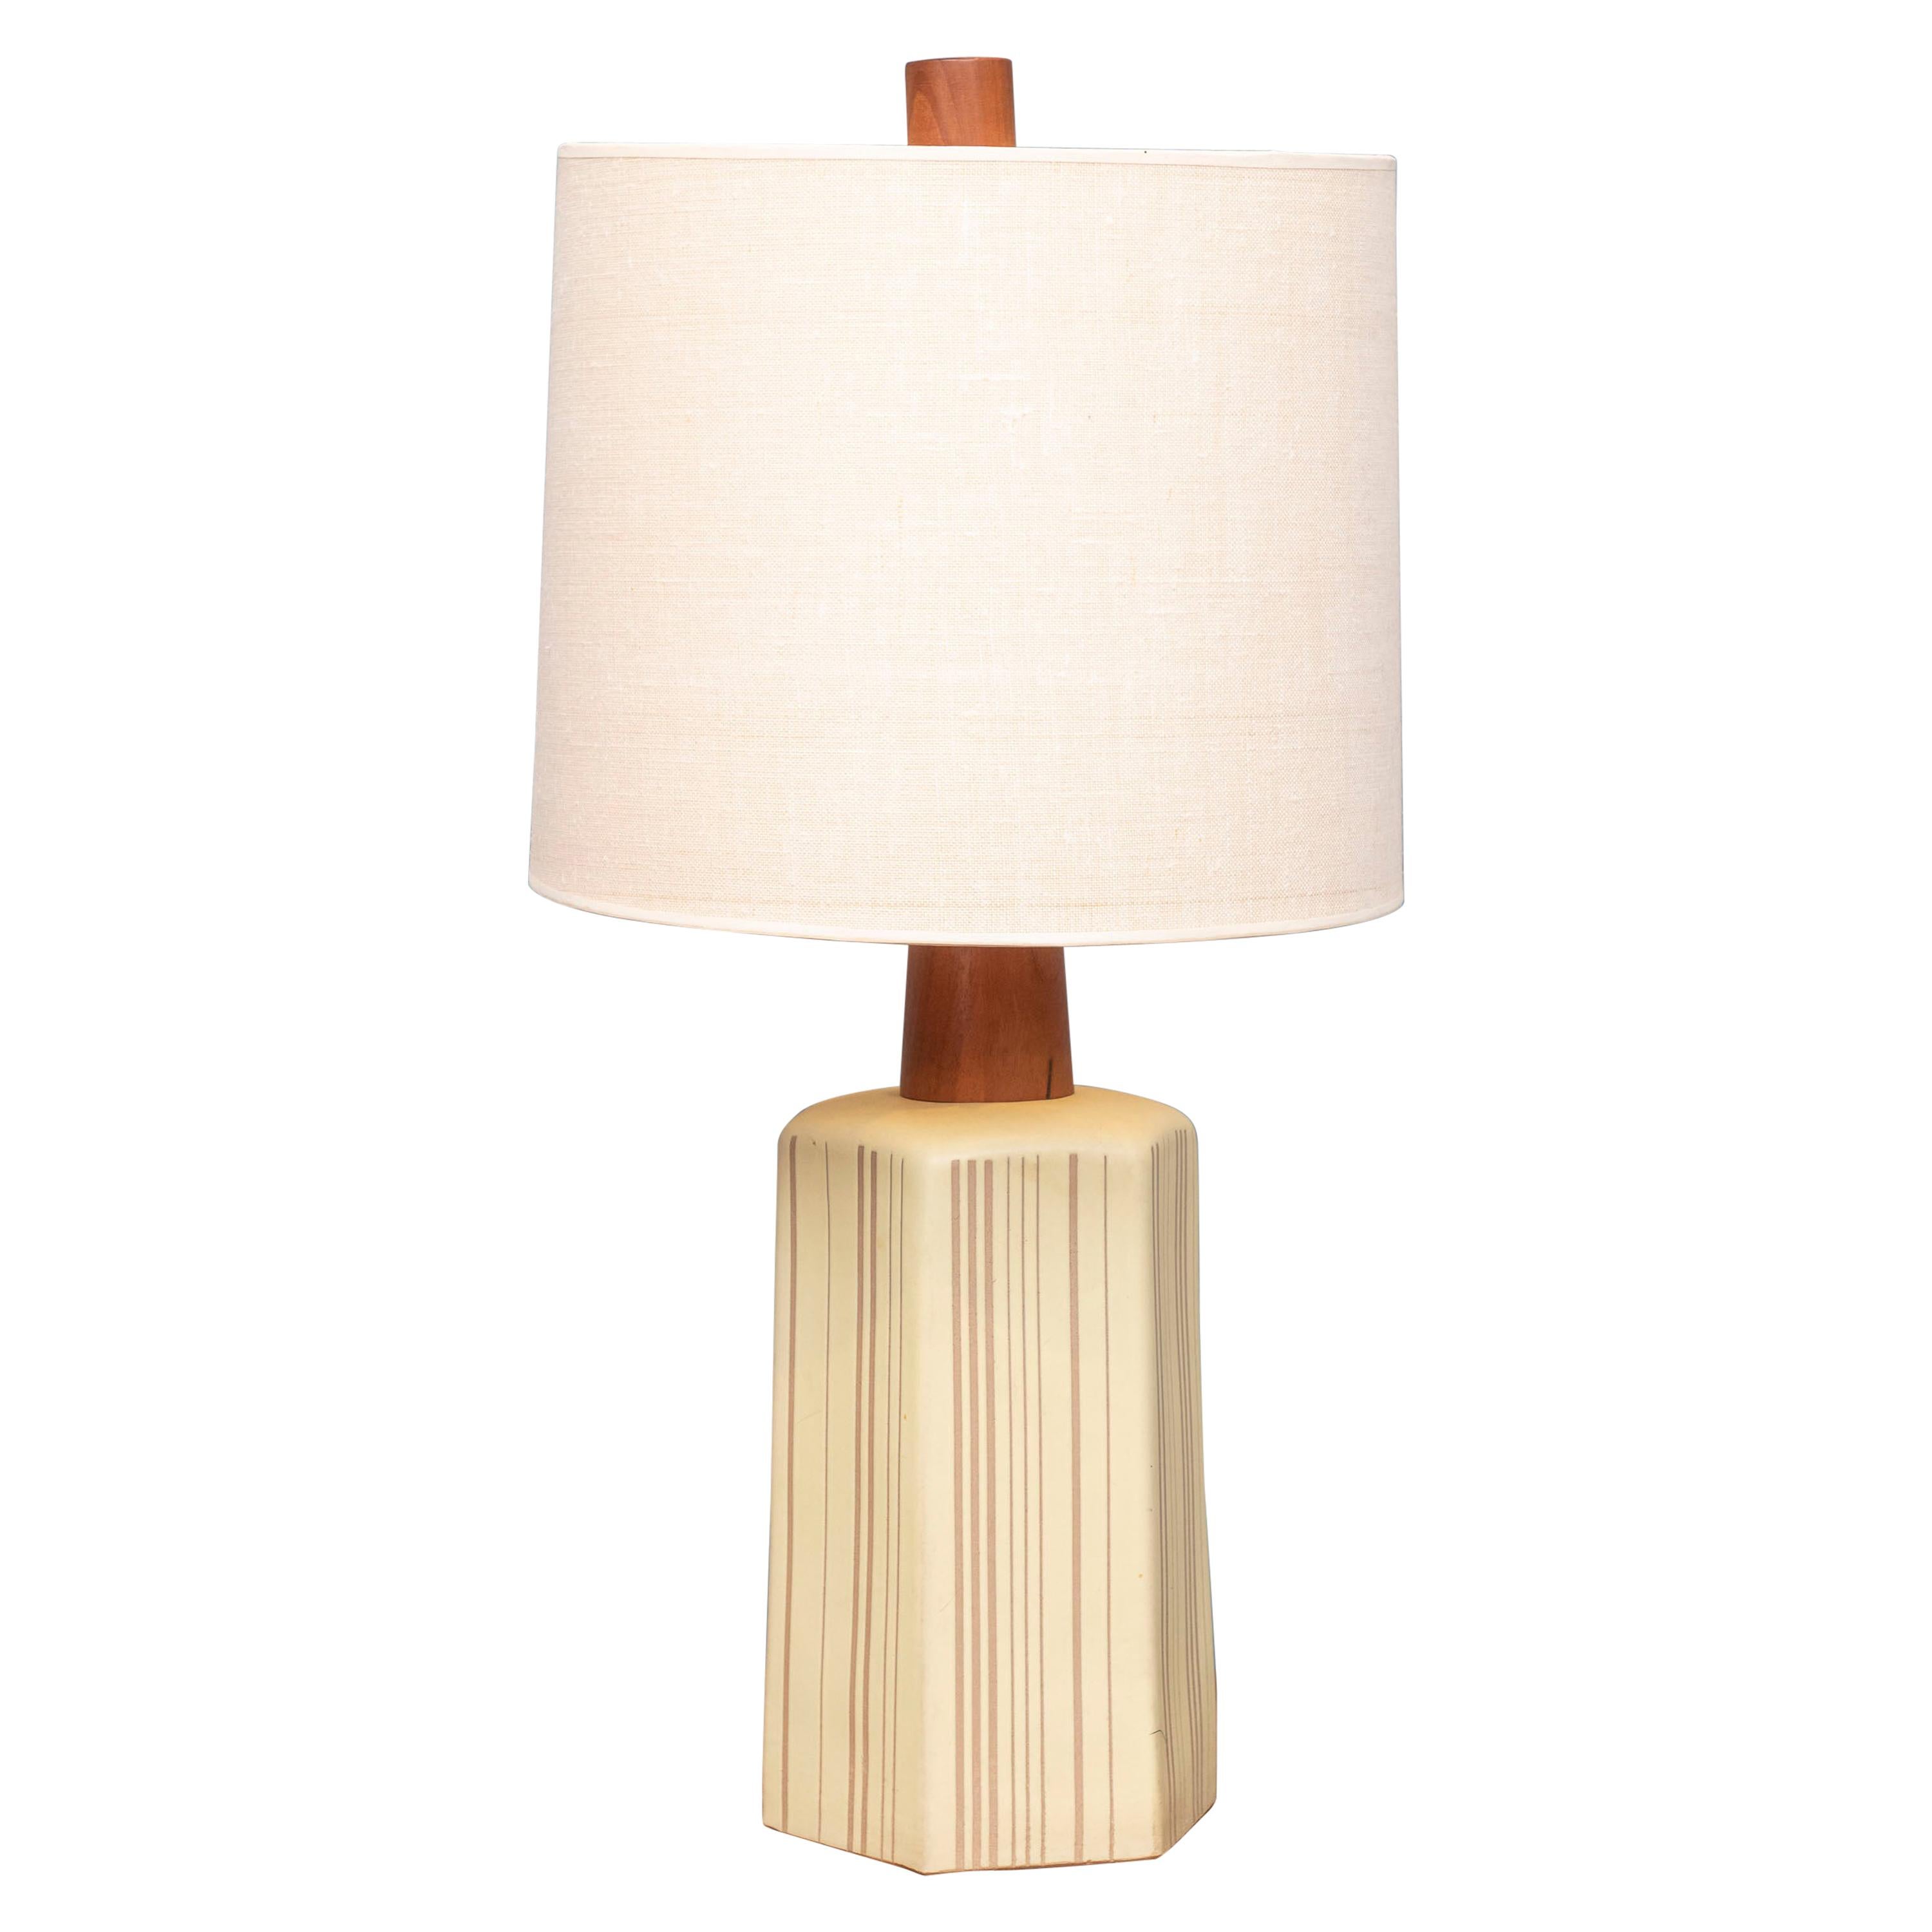 Gordon Martz Ceramic Table Lamp For Sale